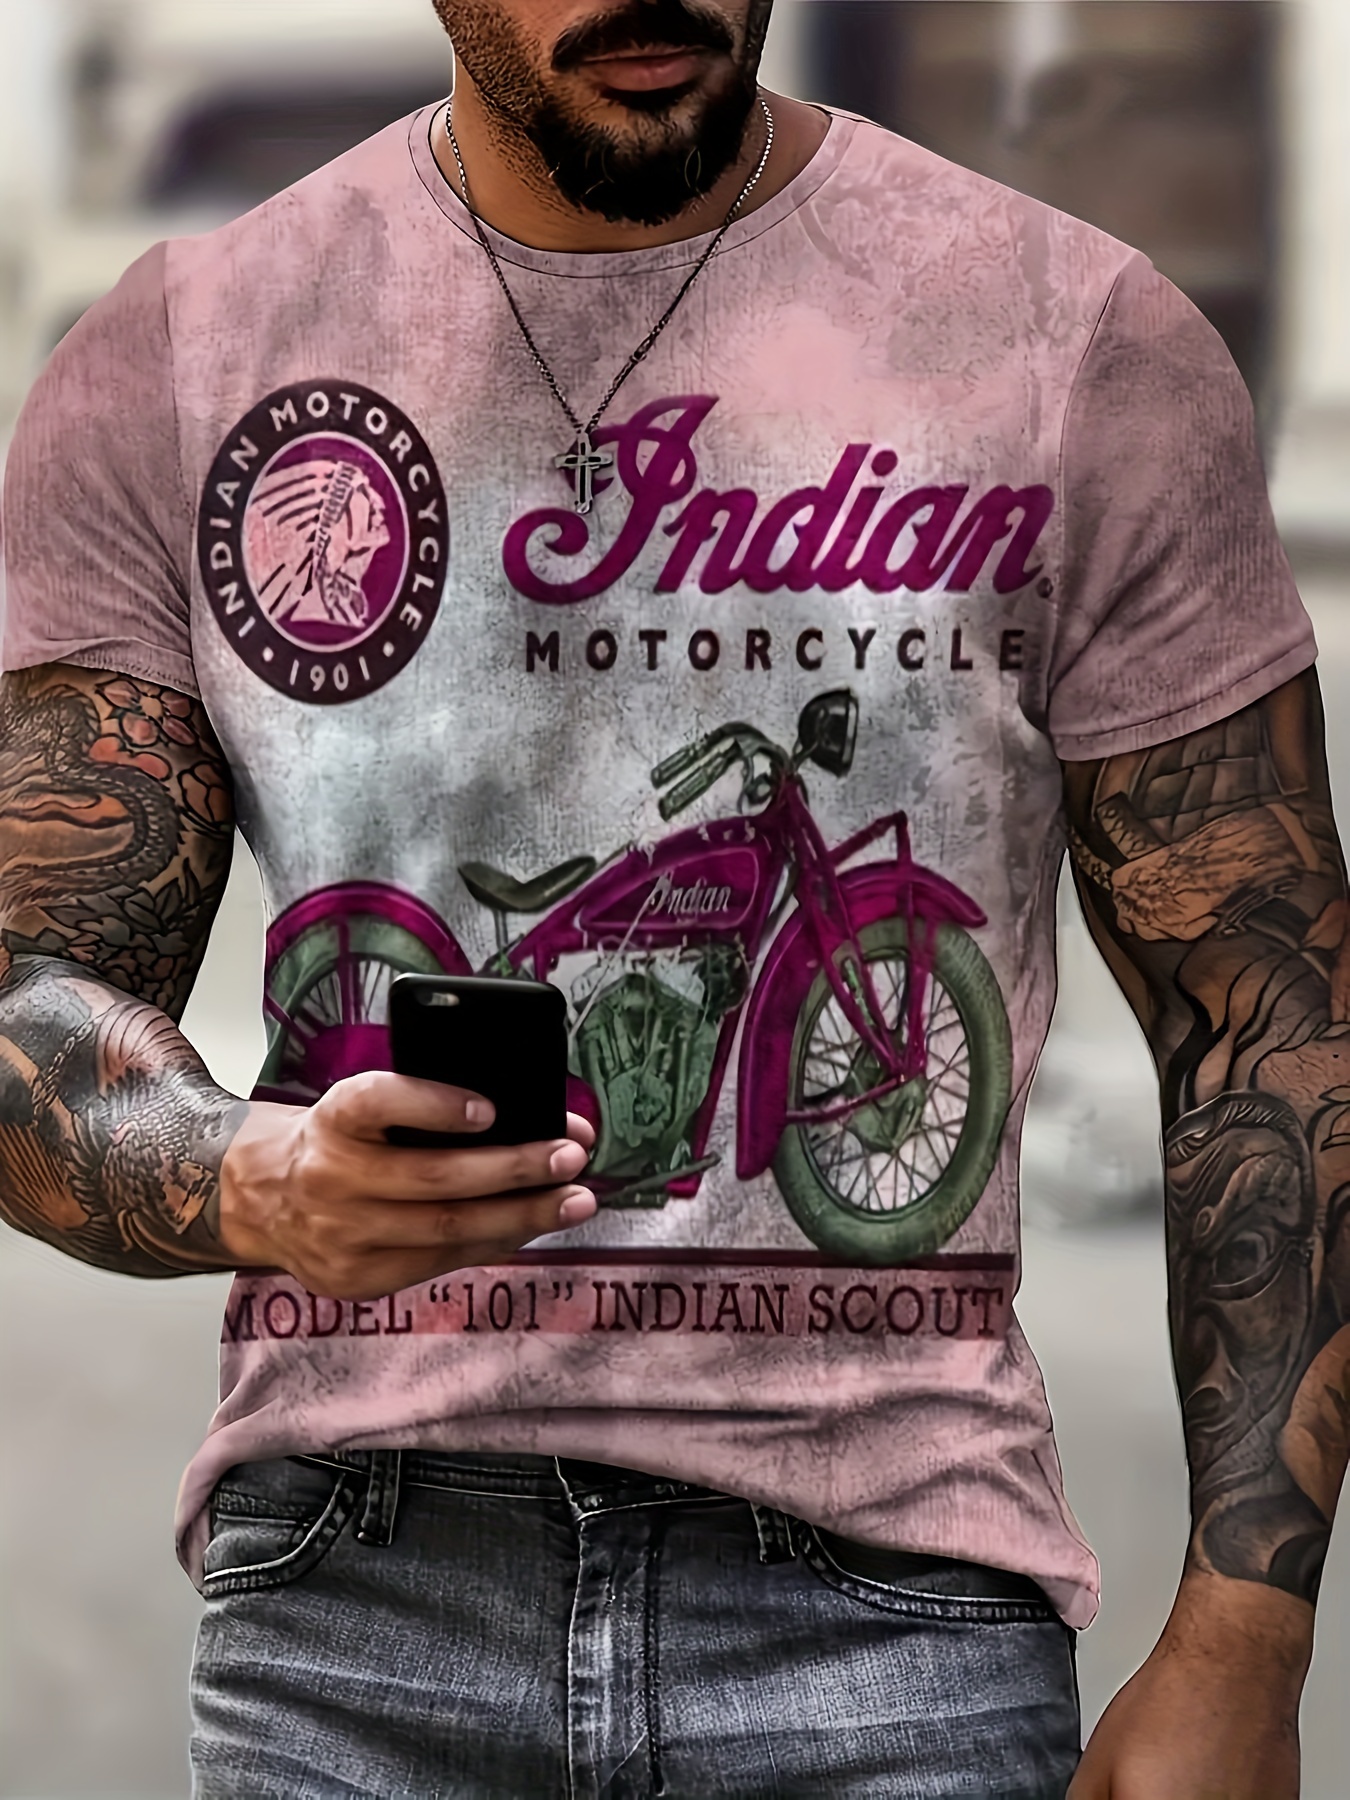 Born to Ride Fast Motorcycle Kids T-shirt, Moto Mayhem Kids Tee 